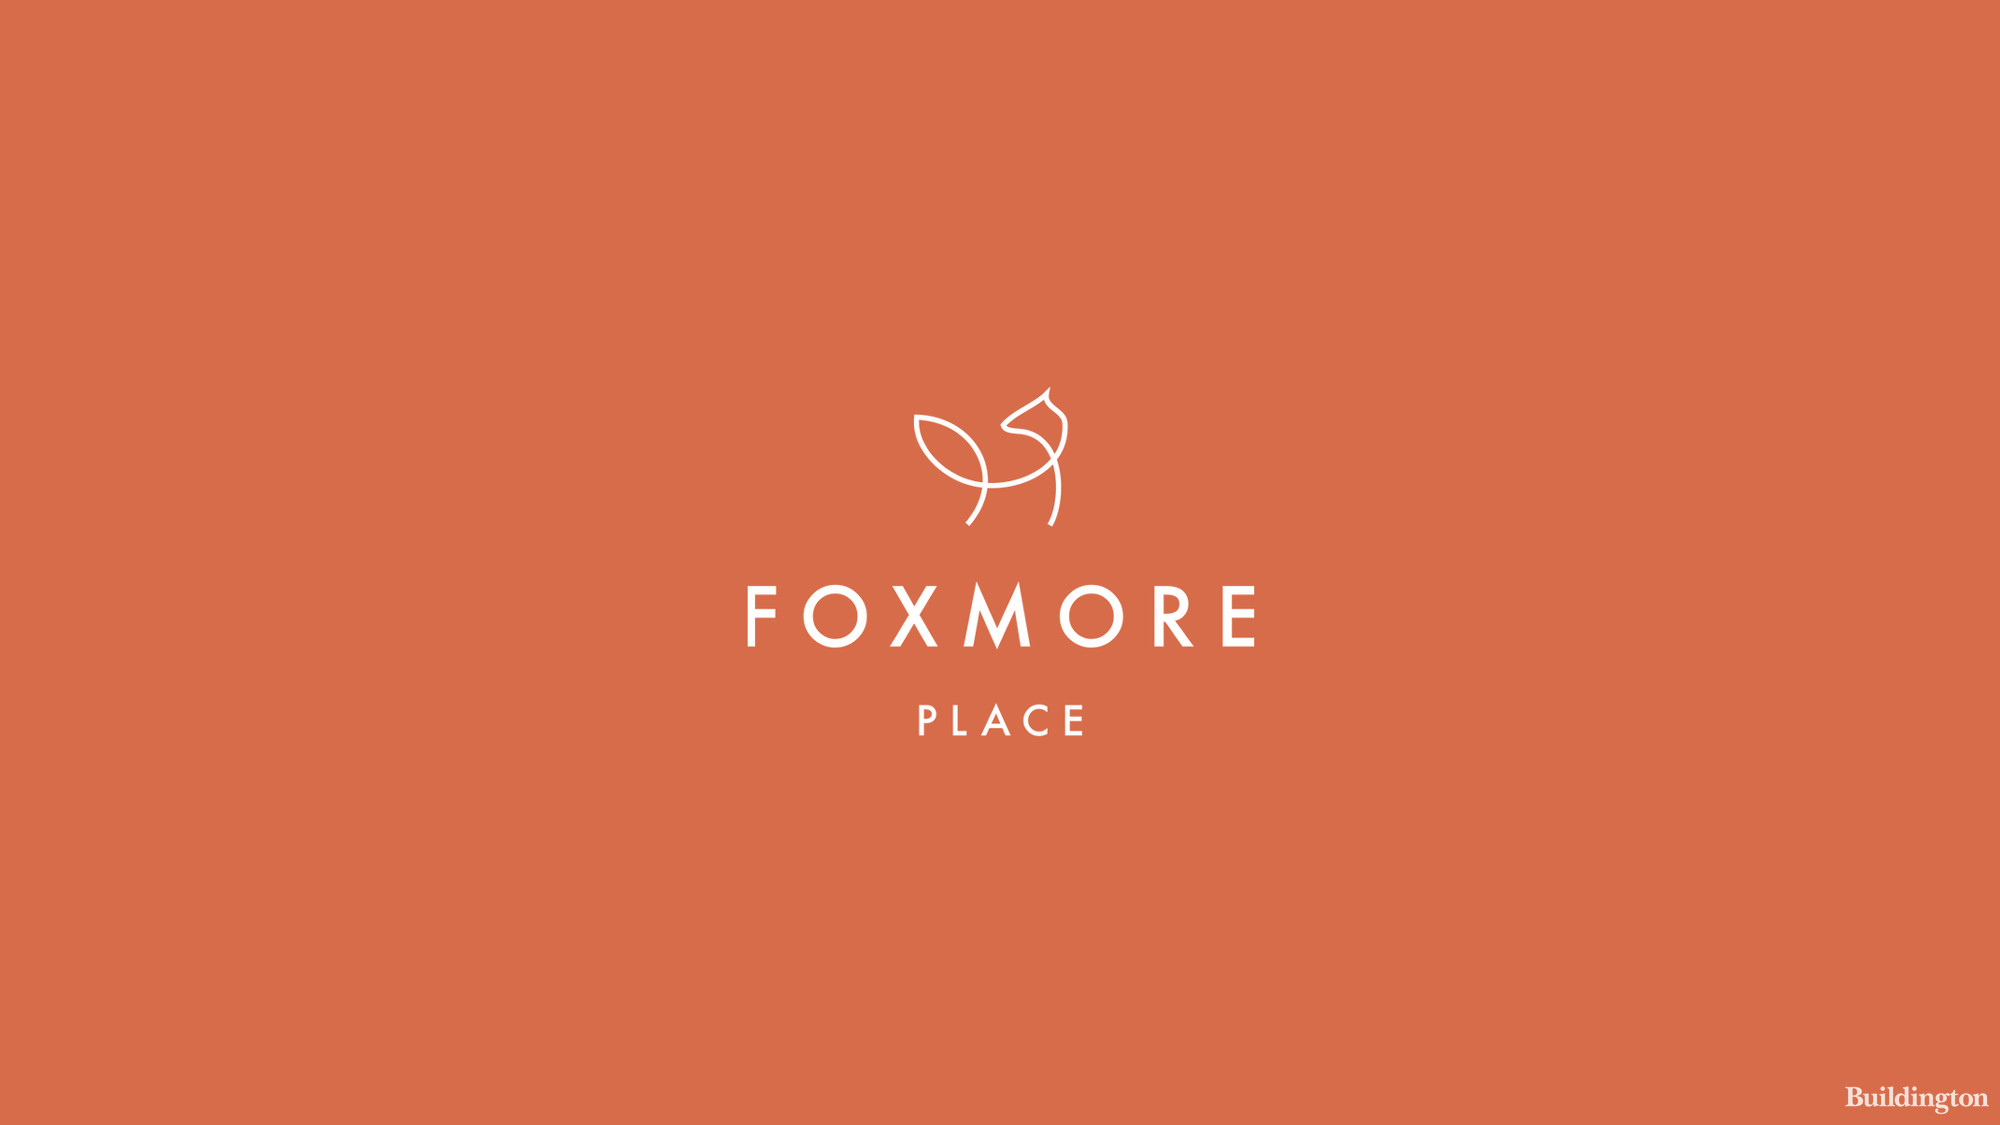 Foxmore Place development logo.